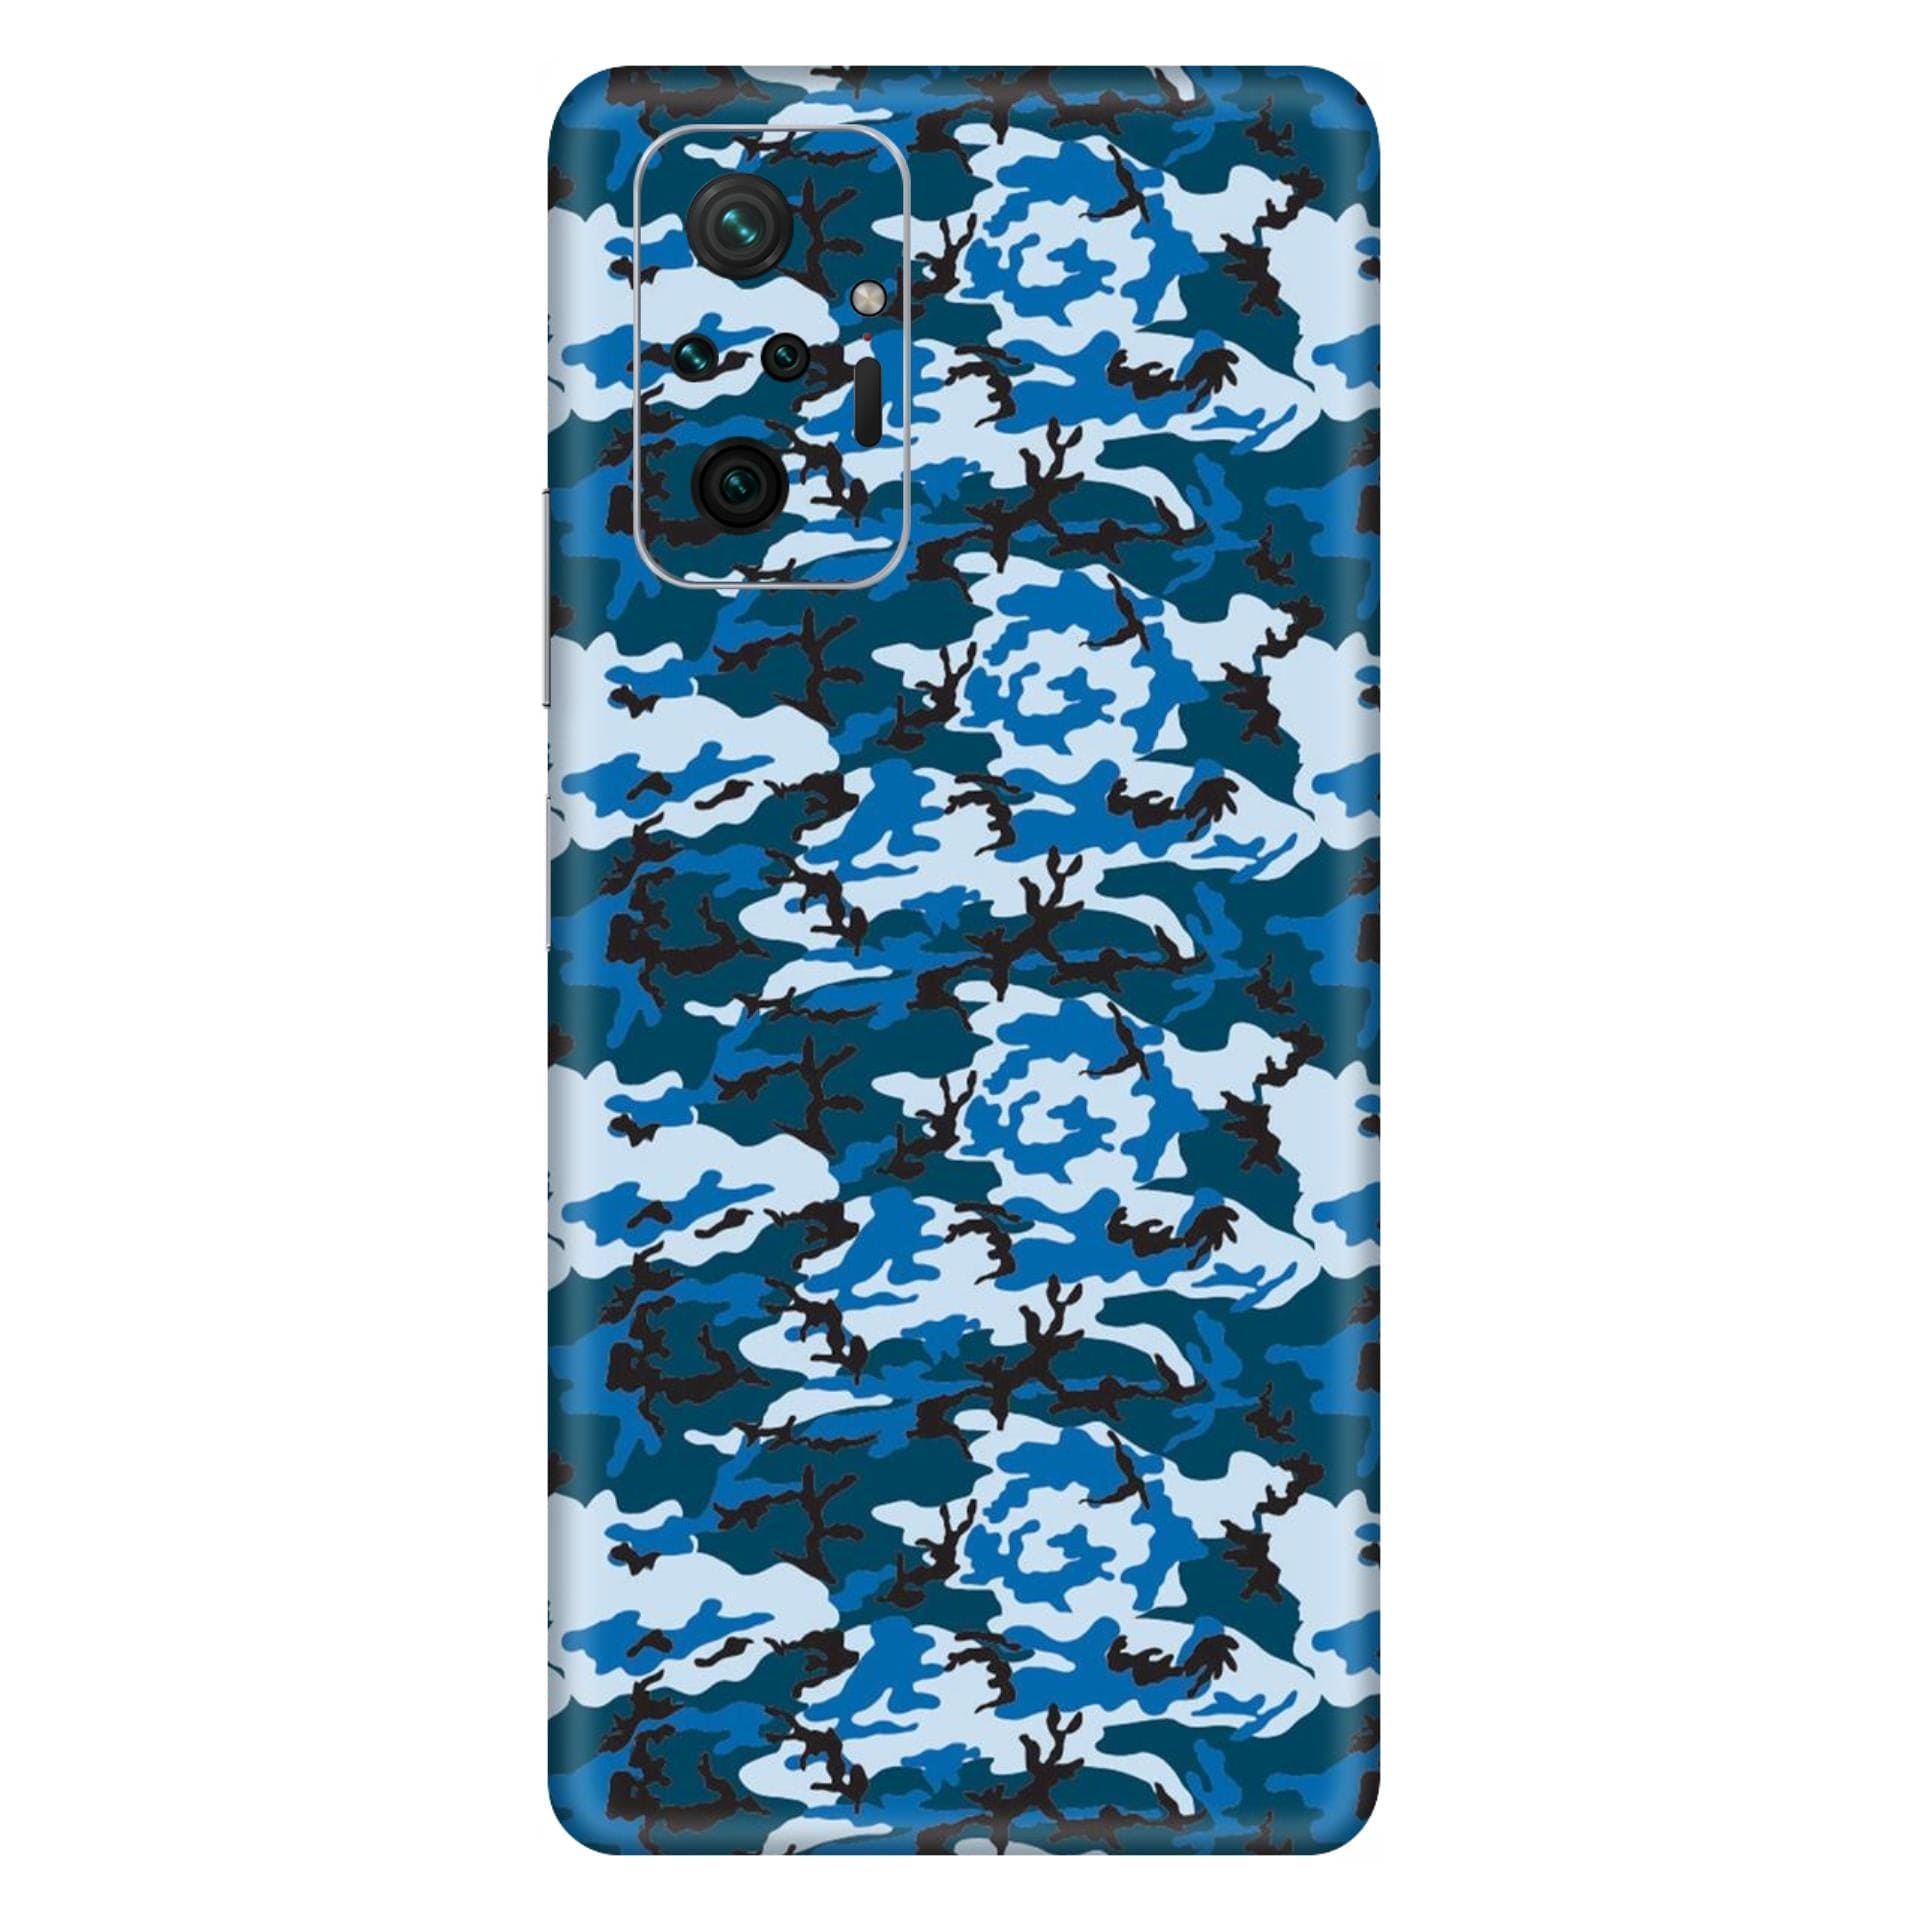 Redmi Note 10 Pro Max Digi Blue Camo skins